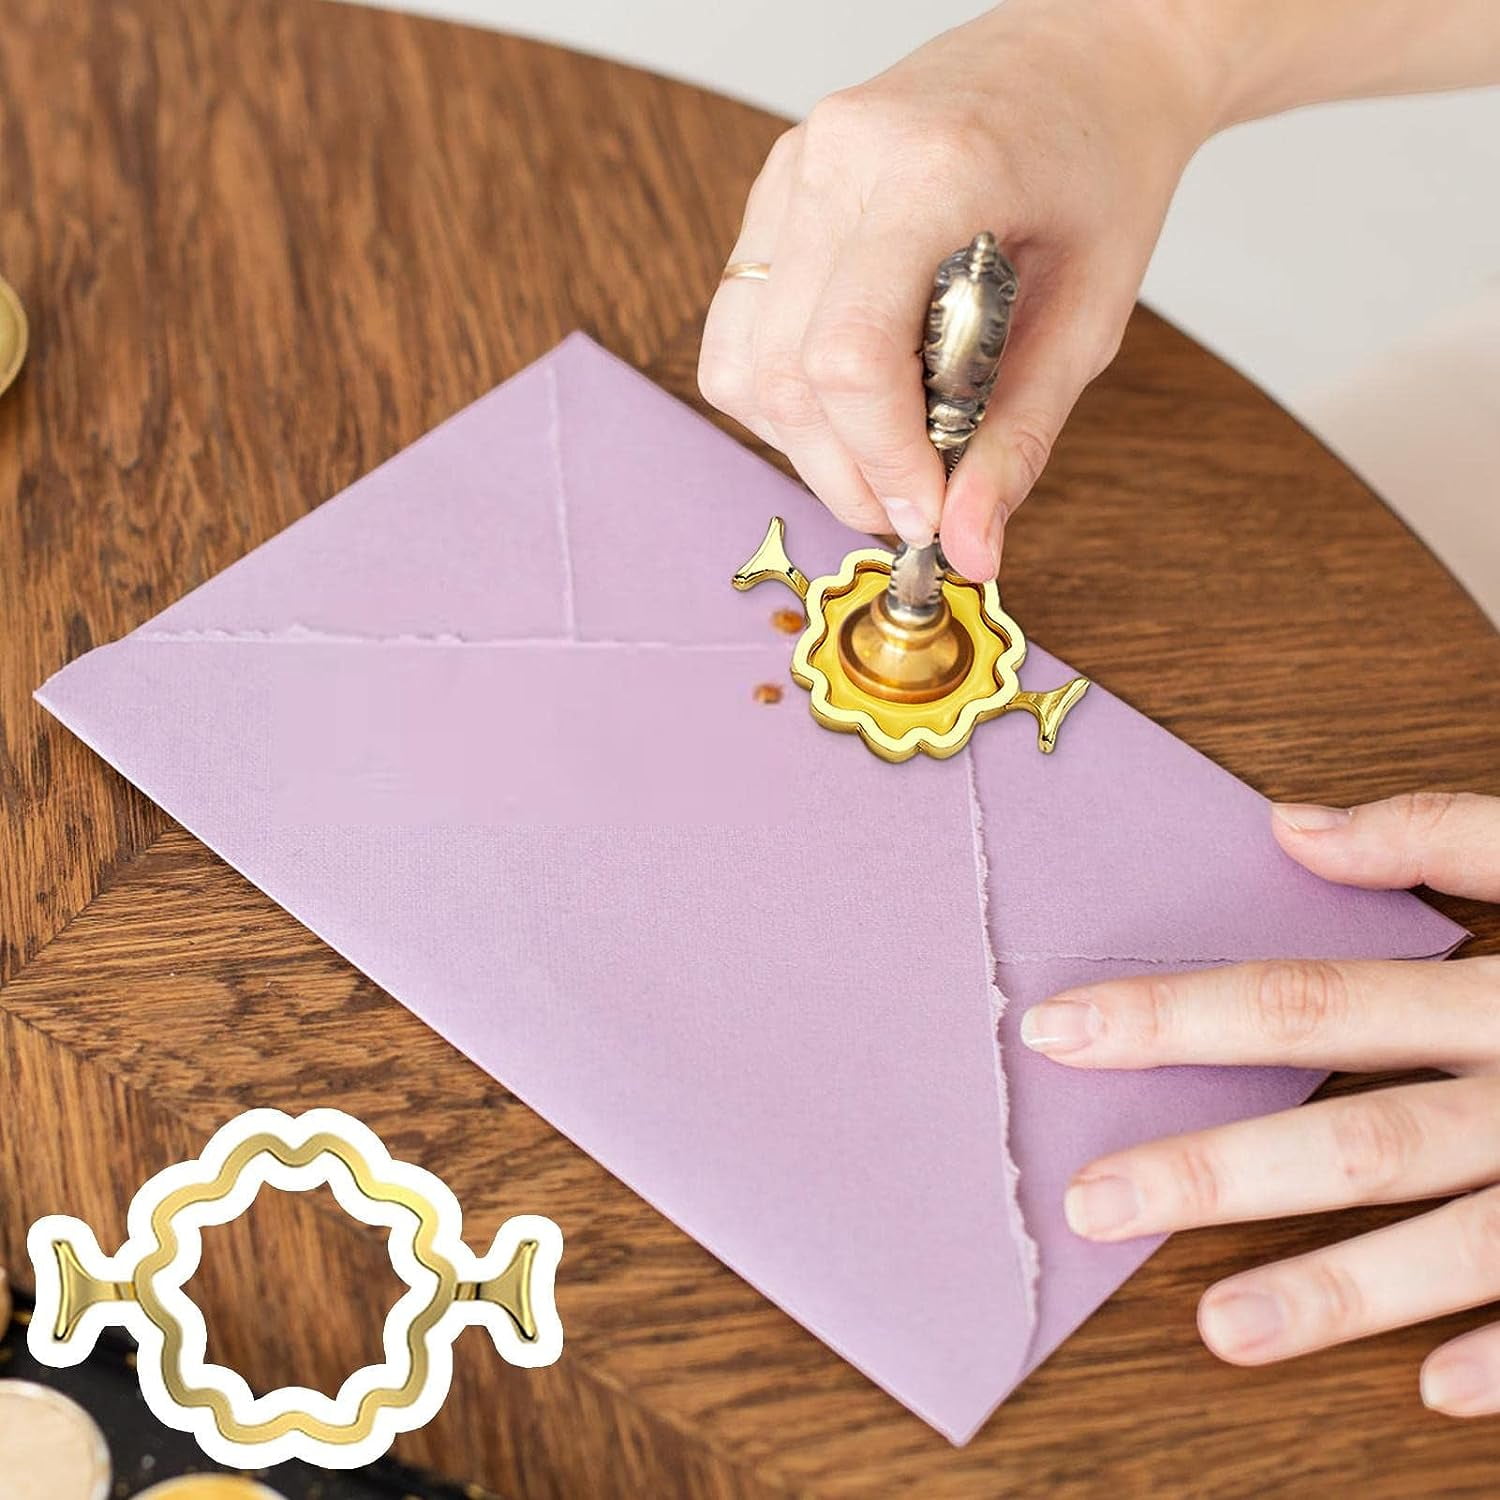 Falx Wax Seal Mold - Multi-shapes Heart Flower Round Star Square Wavy - Heavy Duty Metal Long Handle - DIY Zinc Alloy Envelope Wedding Cards Craft 